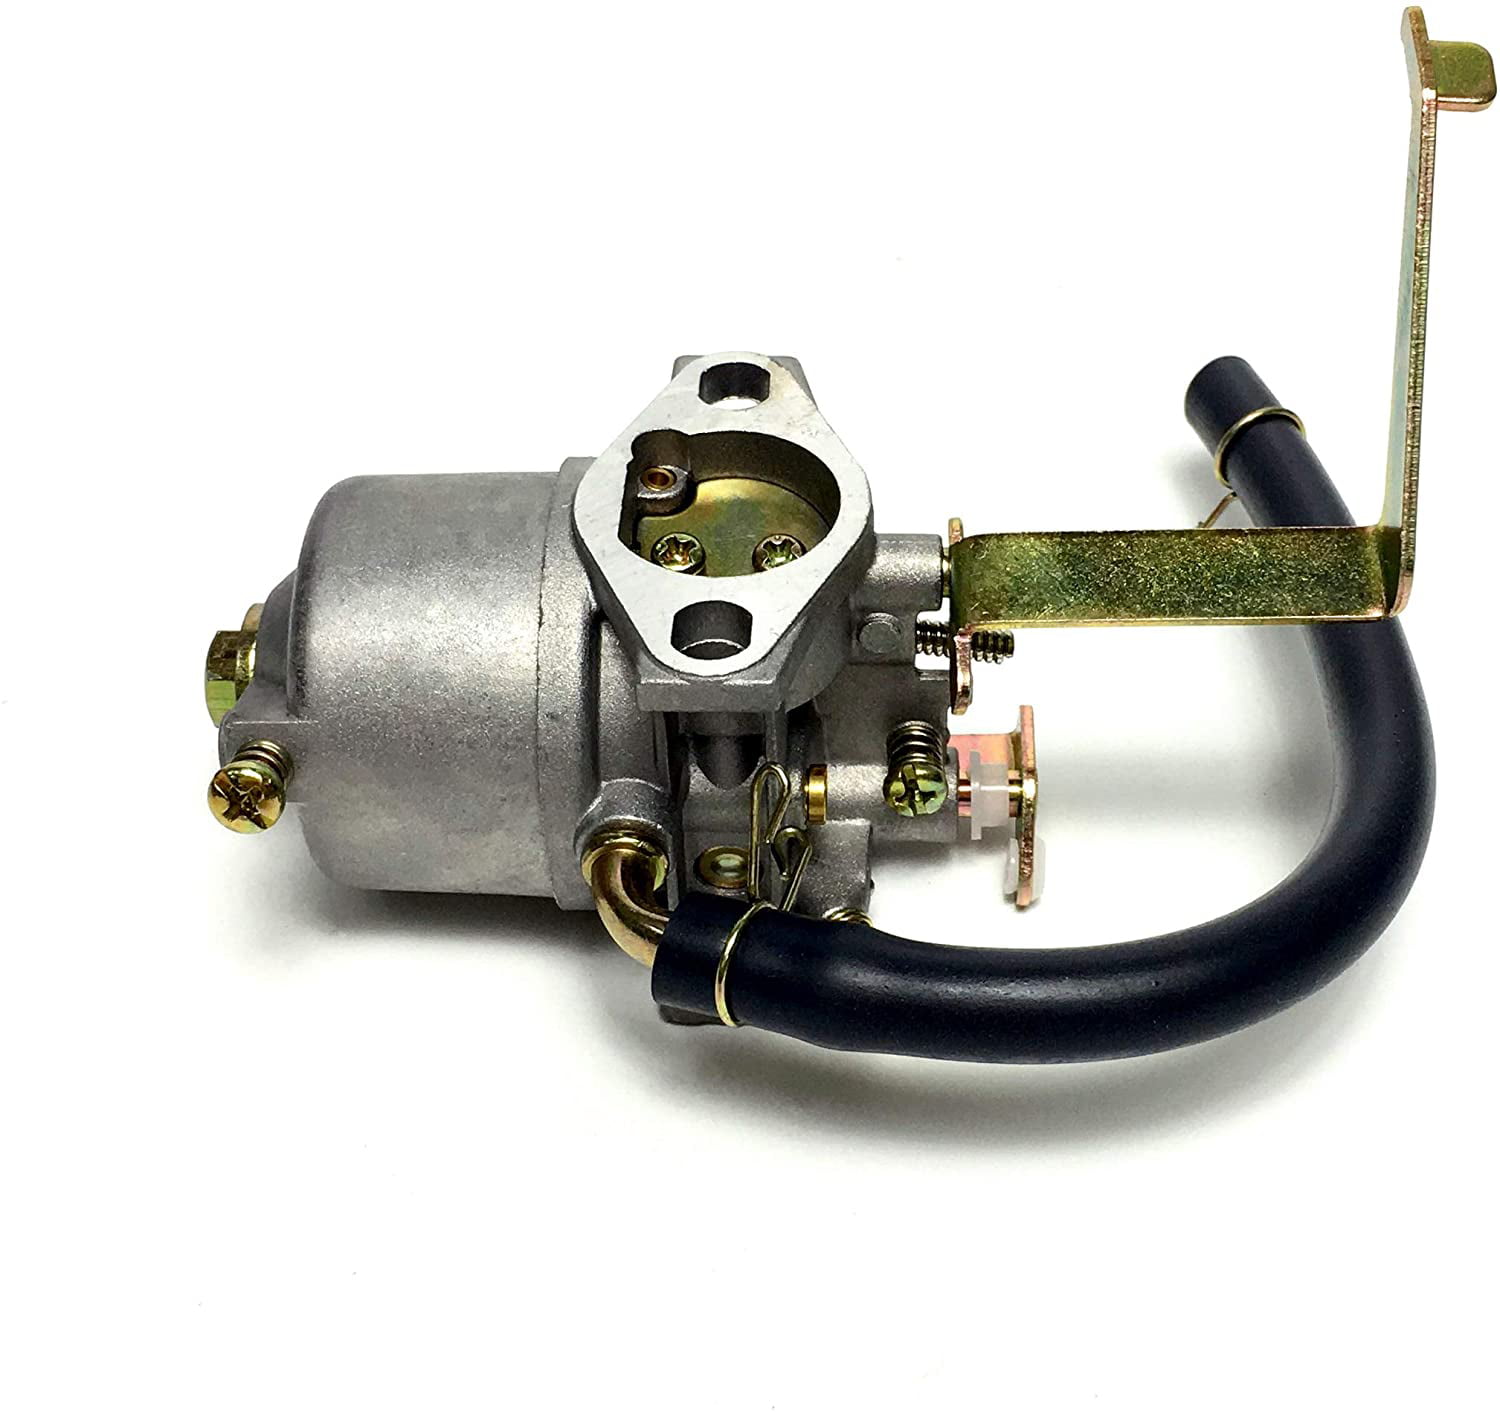 Carburetor & Gaskets Fits WEN 56105 1000-Watt Portable Gasoline Generator 